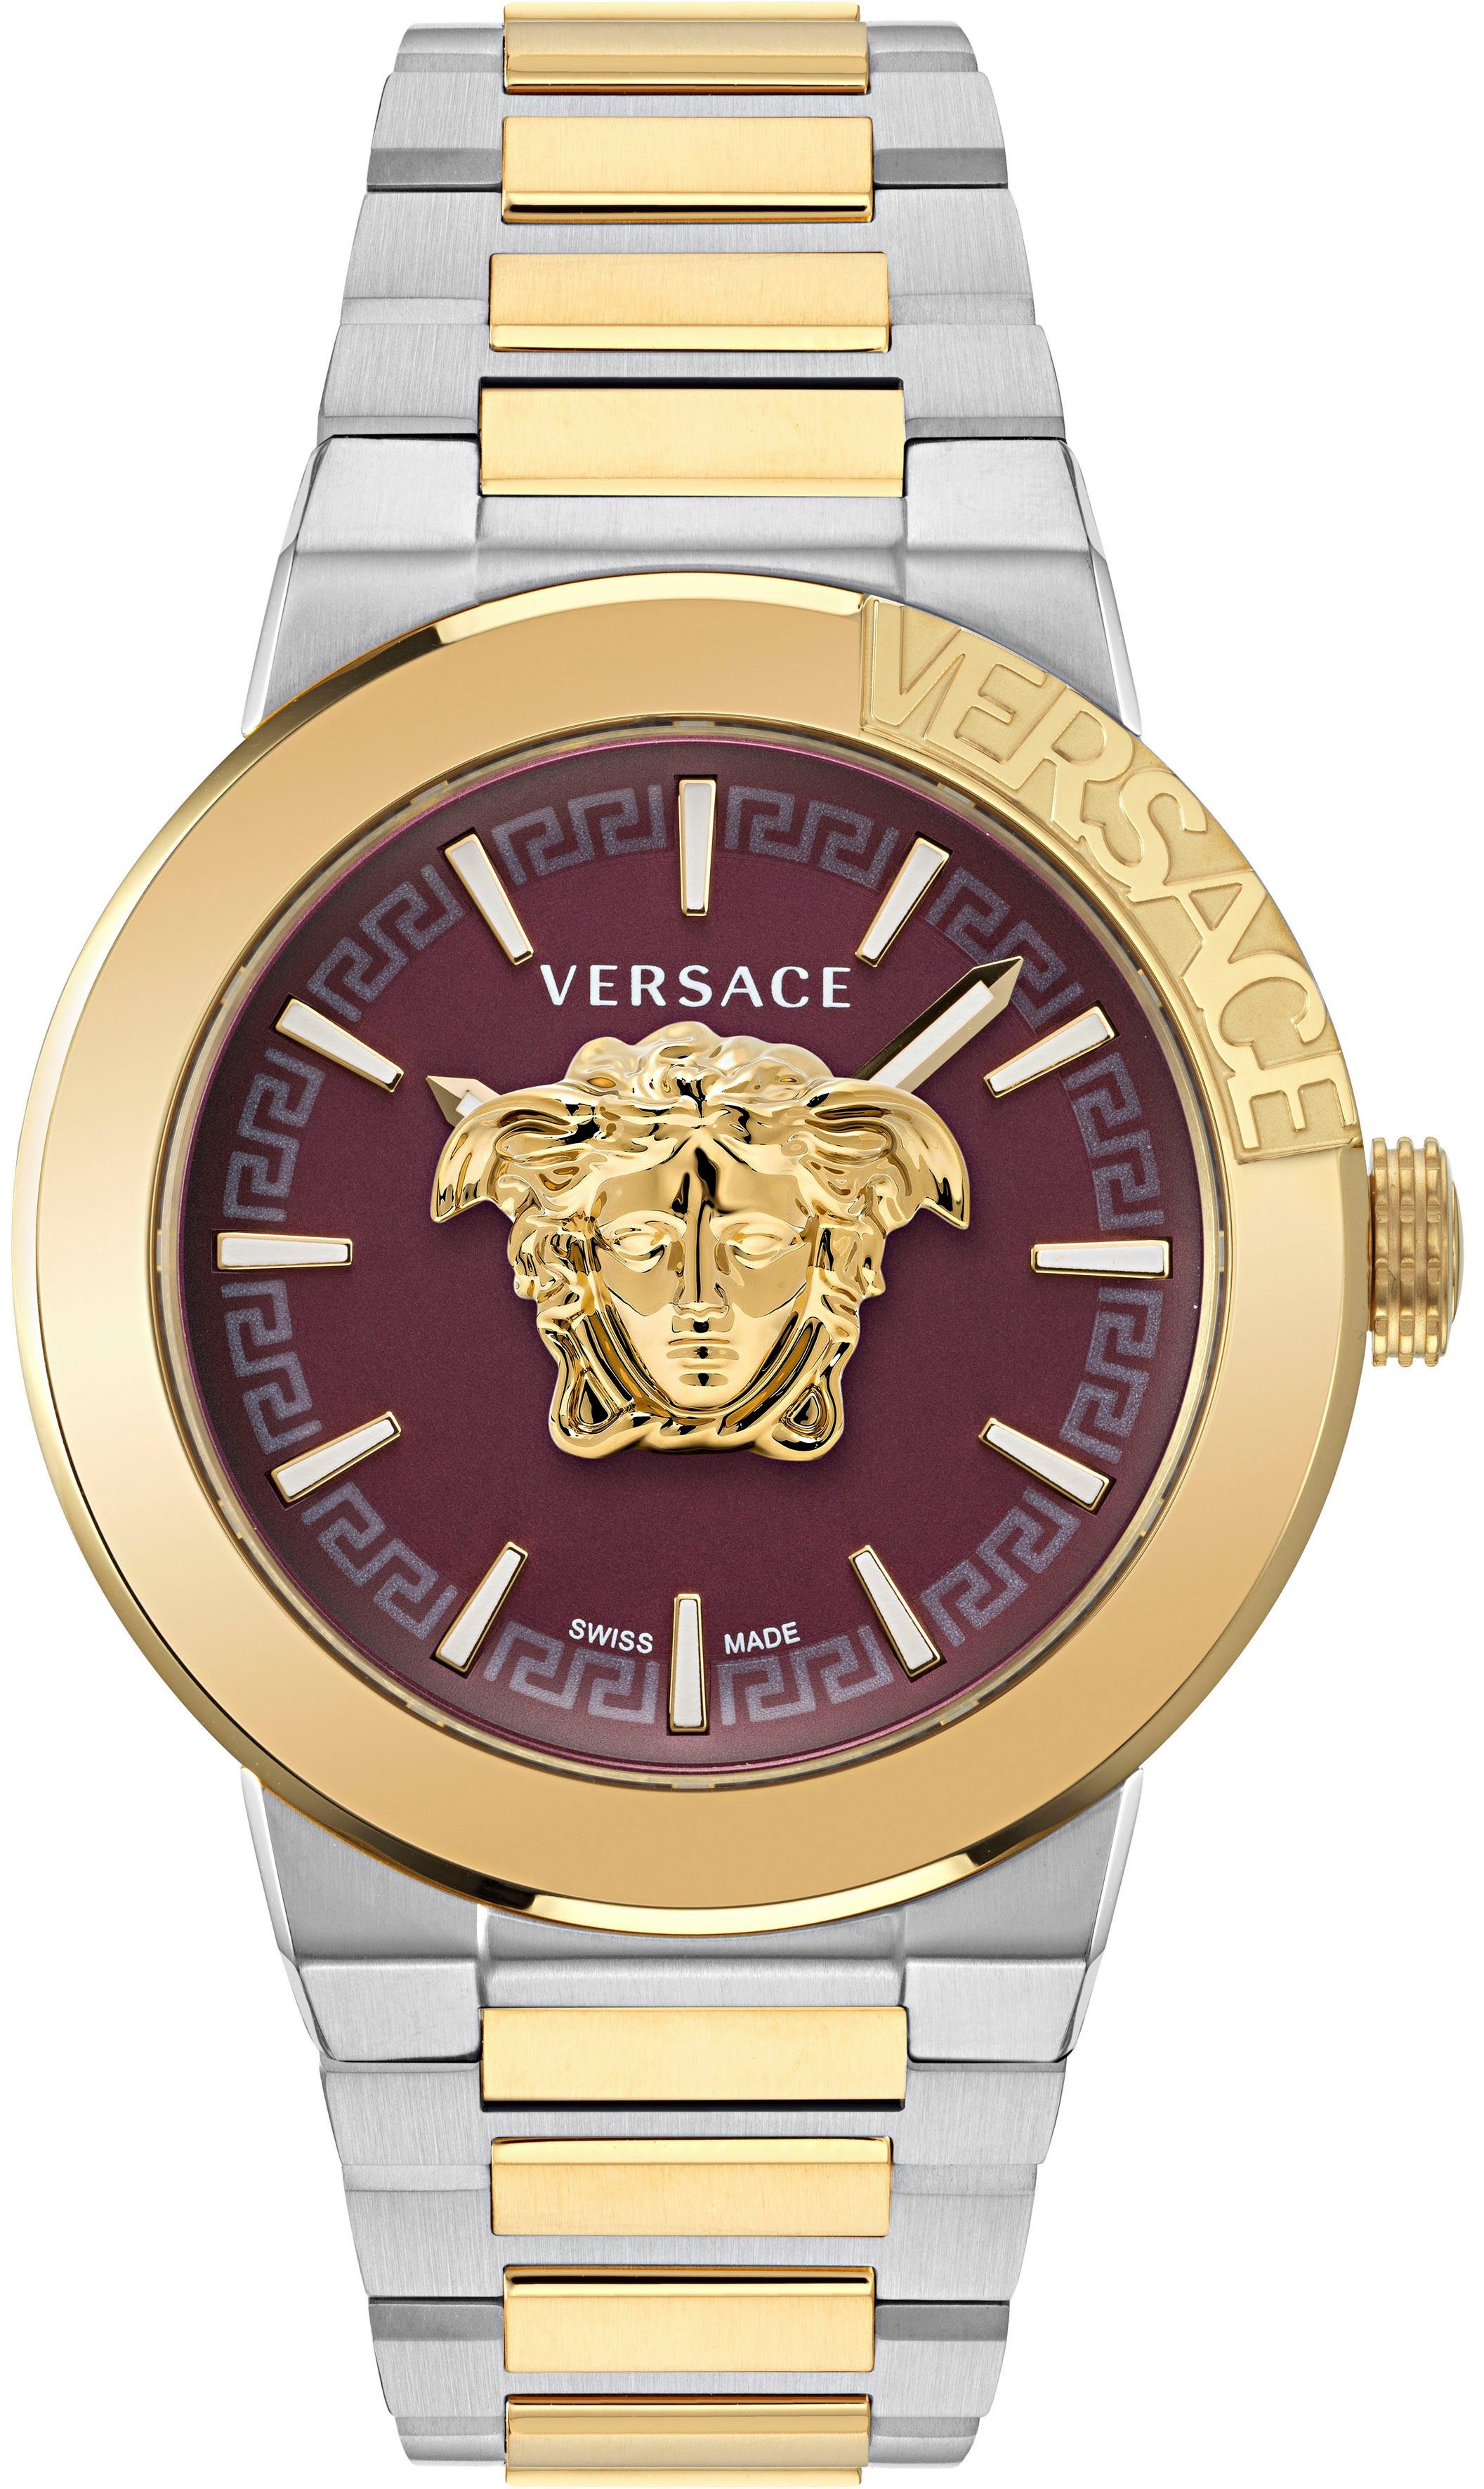 GENT, INFINITE Versace VE7E00523, IP-beschichtetem bicolor Edelstahl Armband aus MEDUSA Quarzuhr